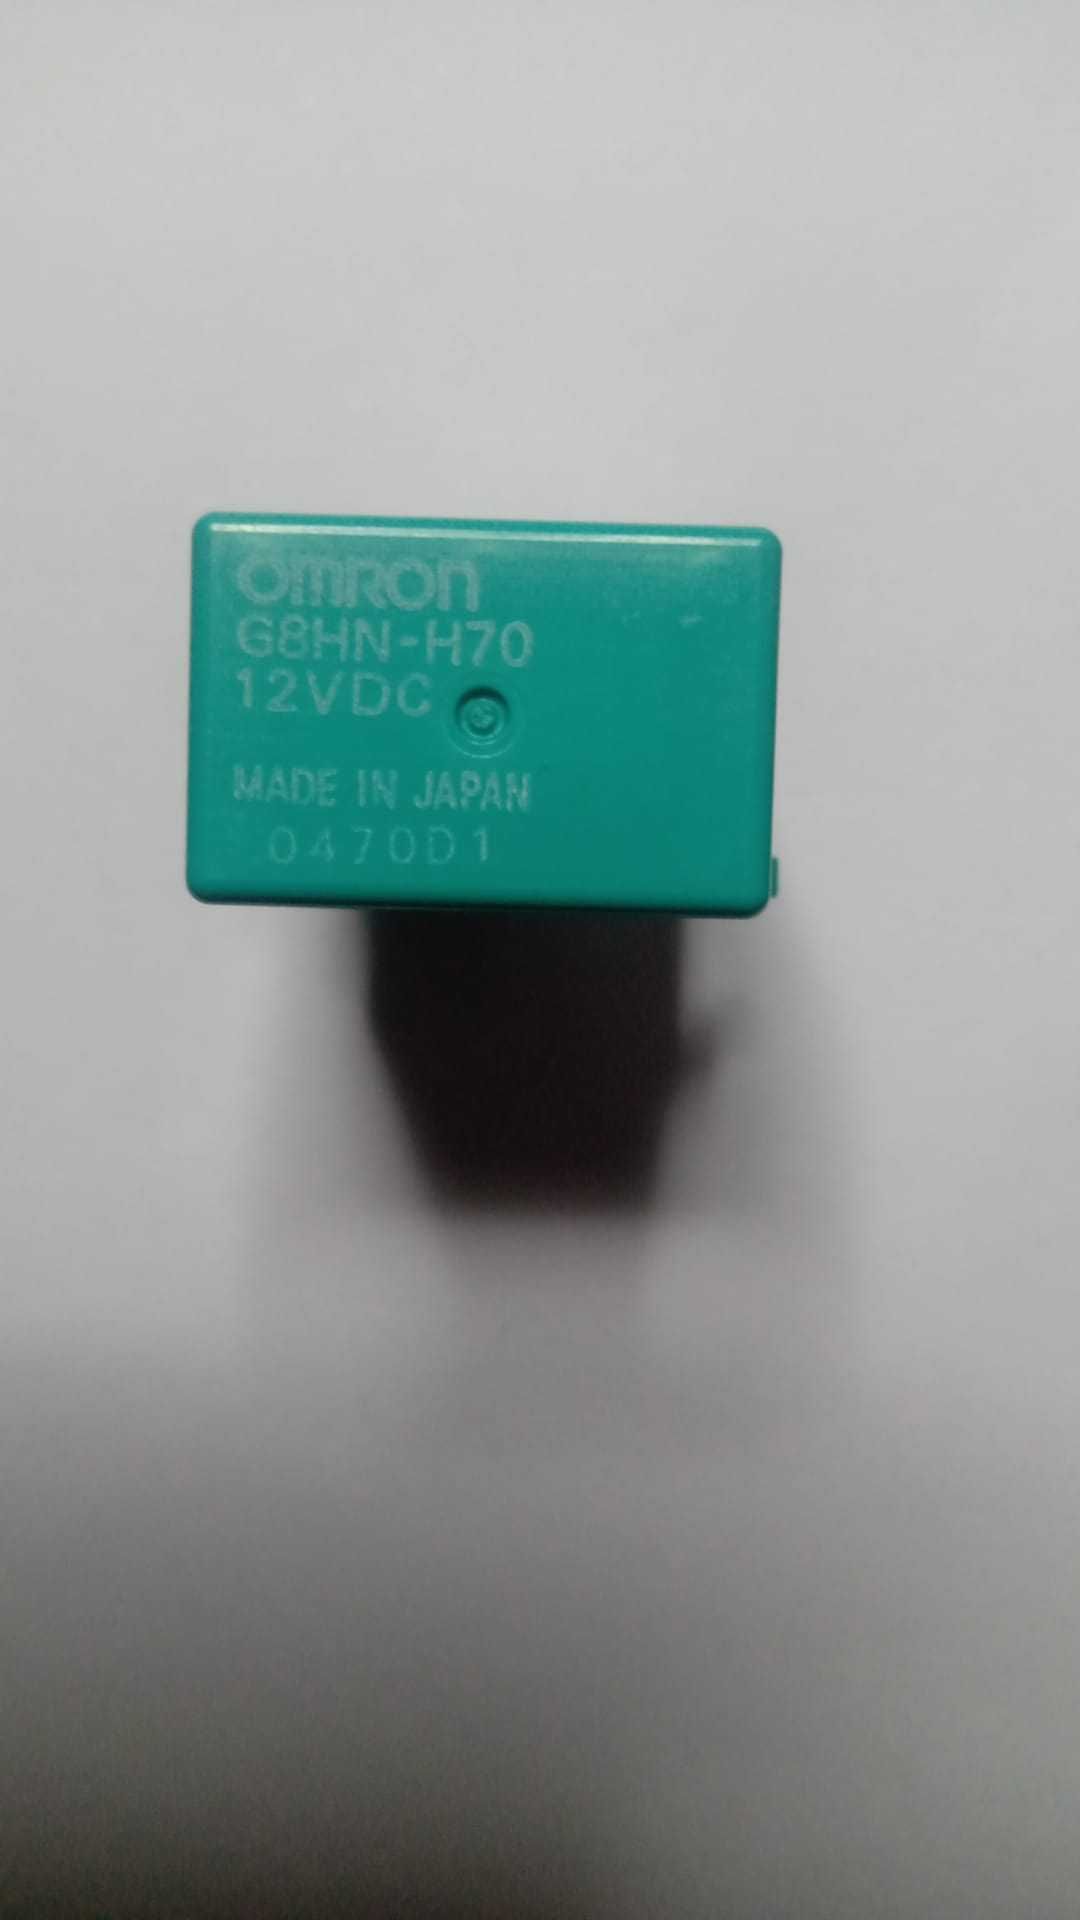 Releu verde Honda, OMRON G8HN-H70, 12VDC, made in JAPAN